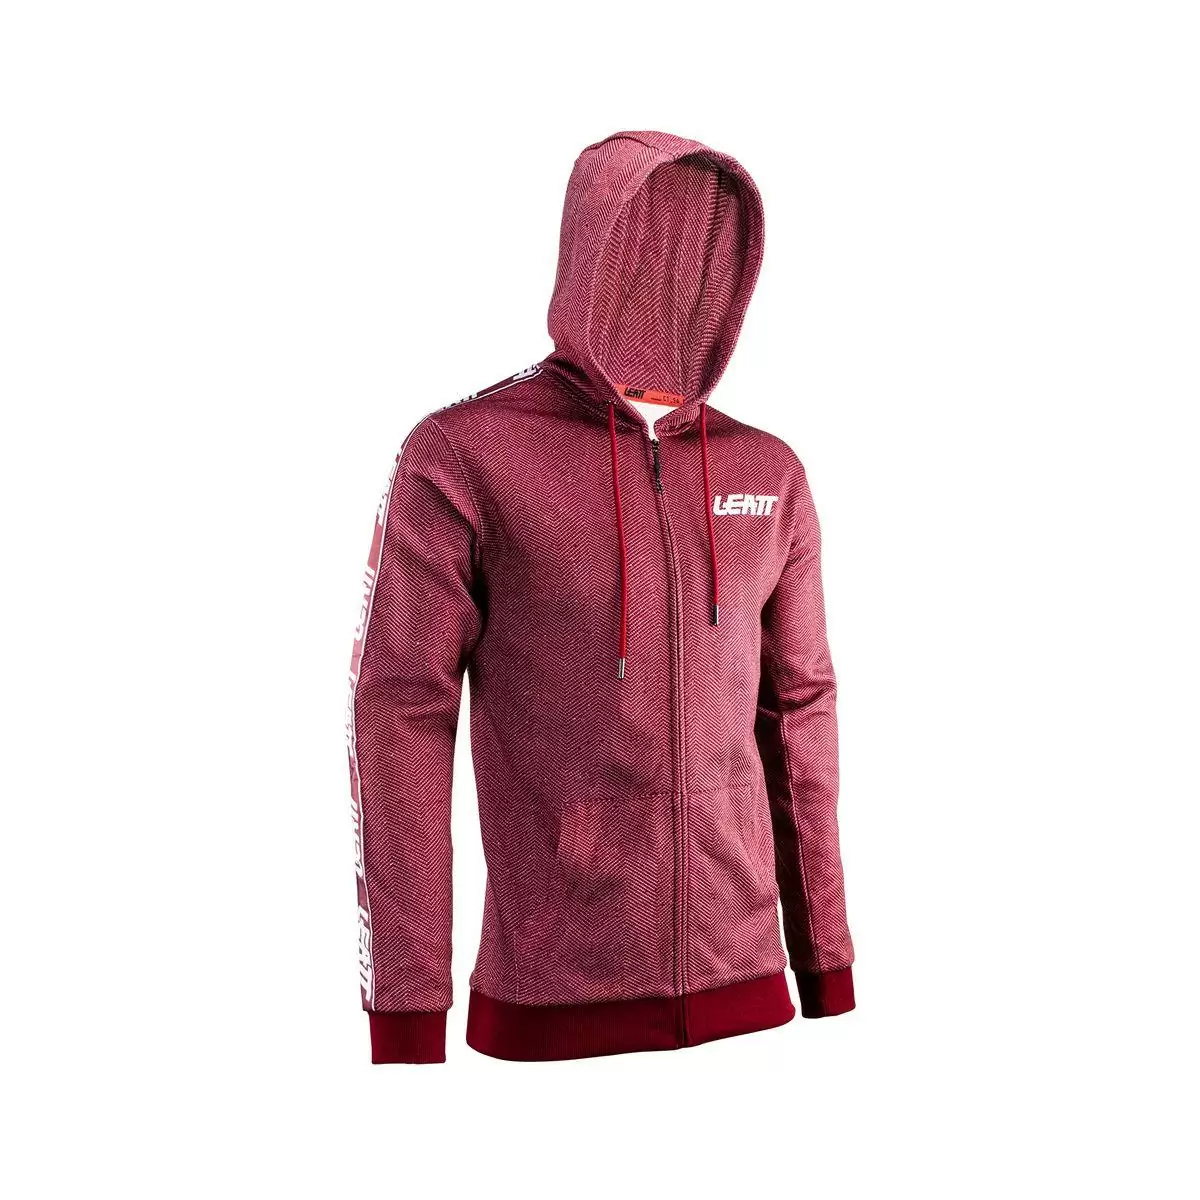 Red Premium Zip Hoodie Sweatshirt Size L - image